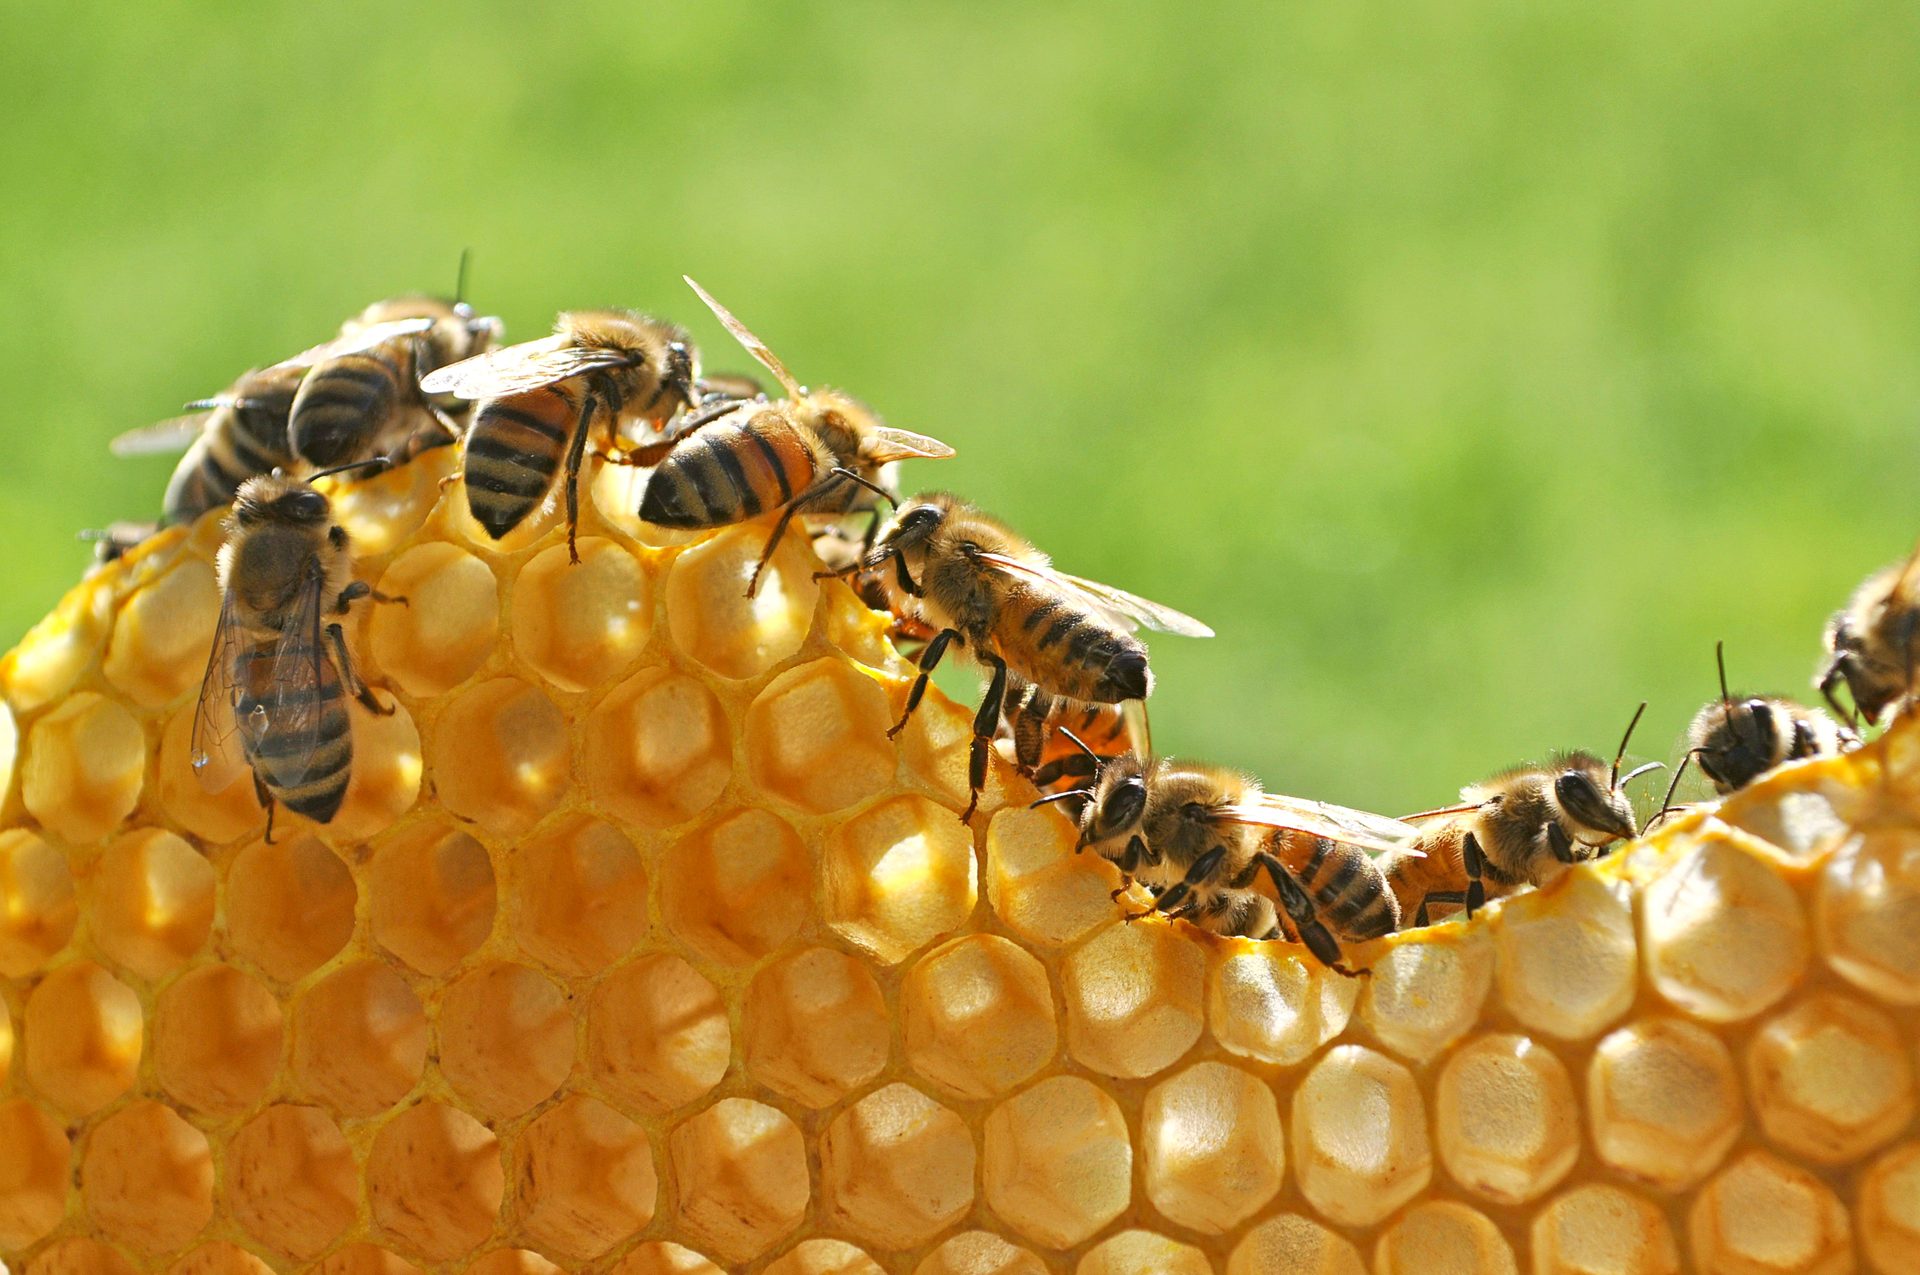 Terrestrial animal, Beehive, Honeycomb, Pollinator, Arthropod, Insect, Honeybee, Organism